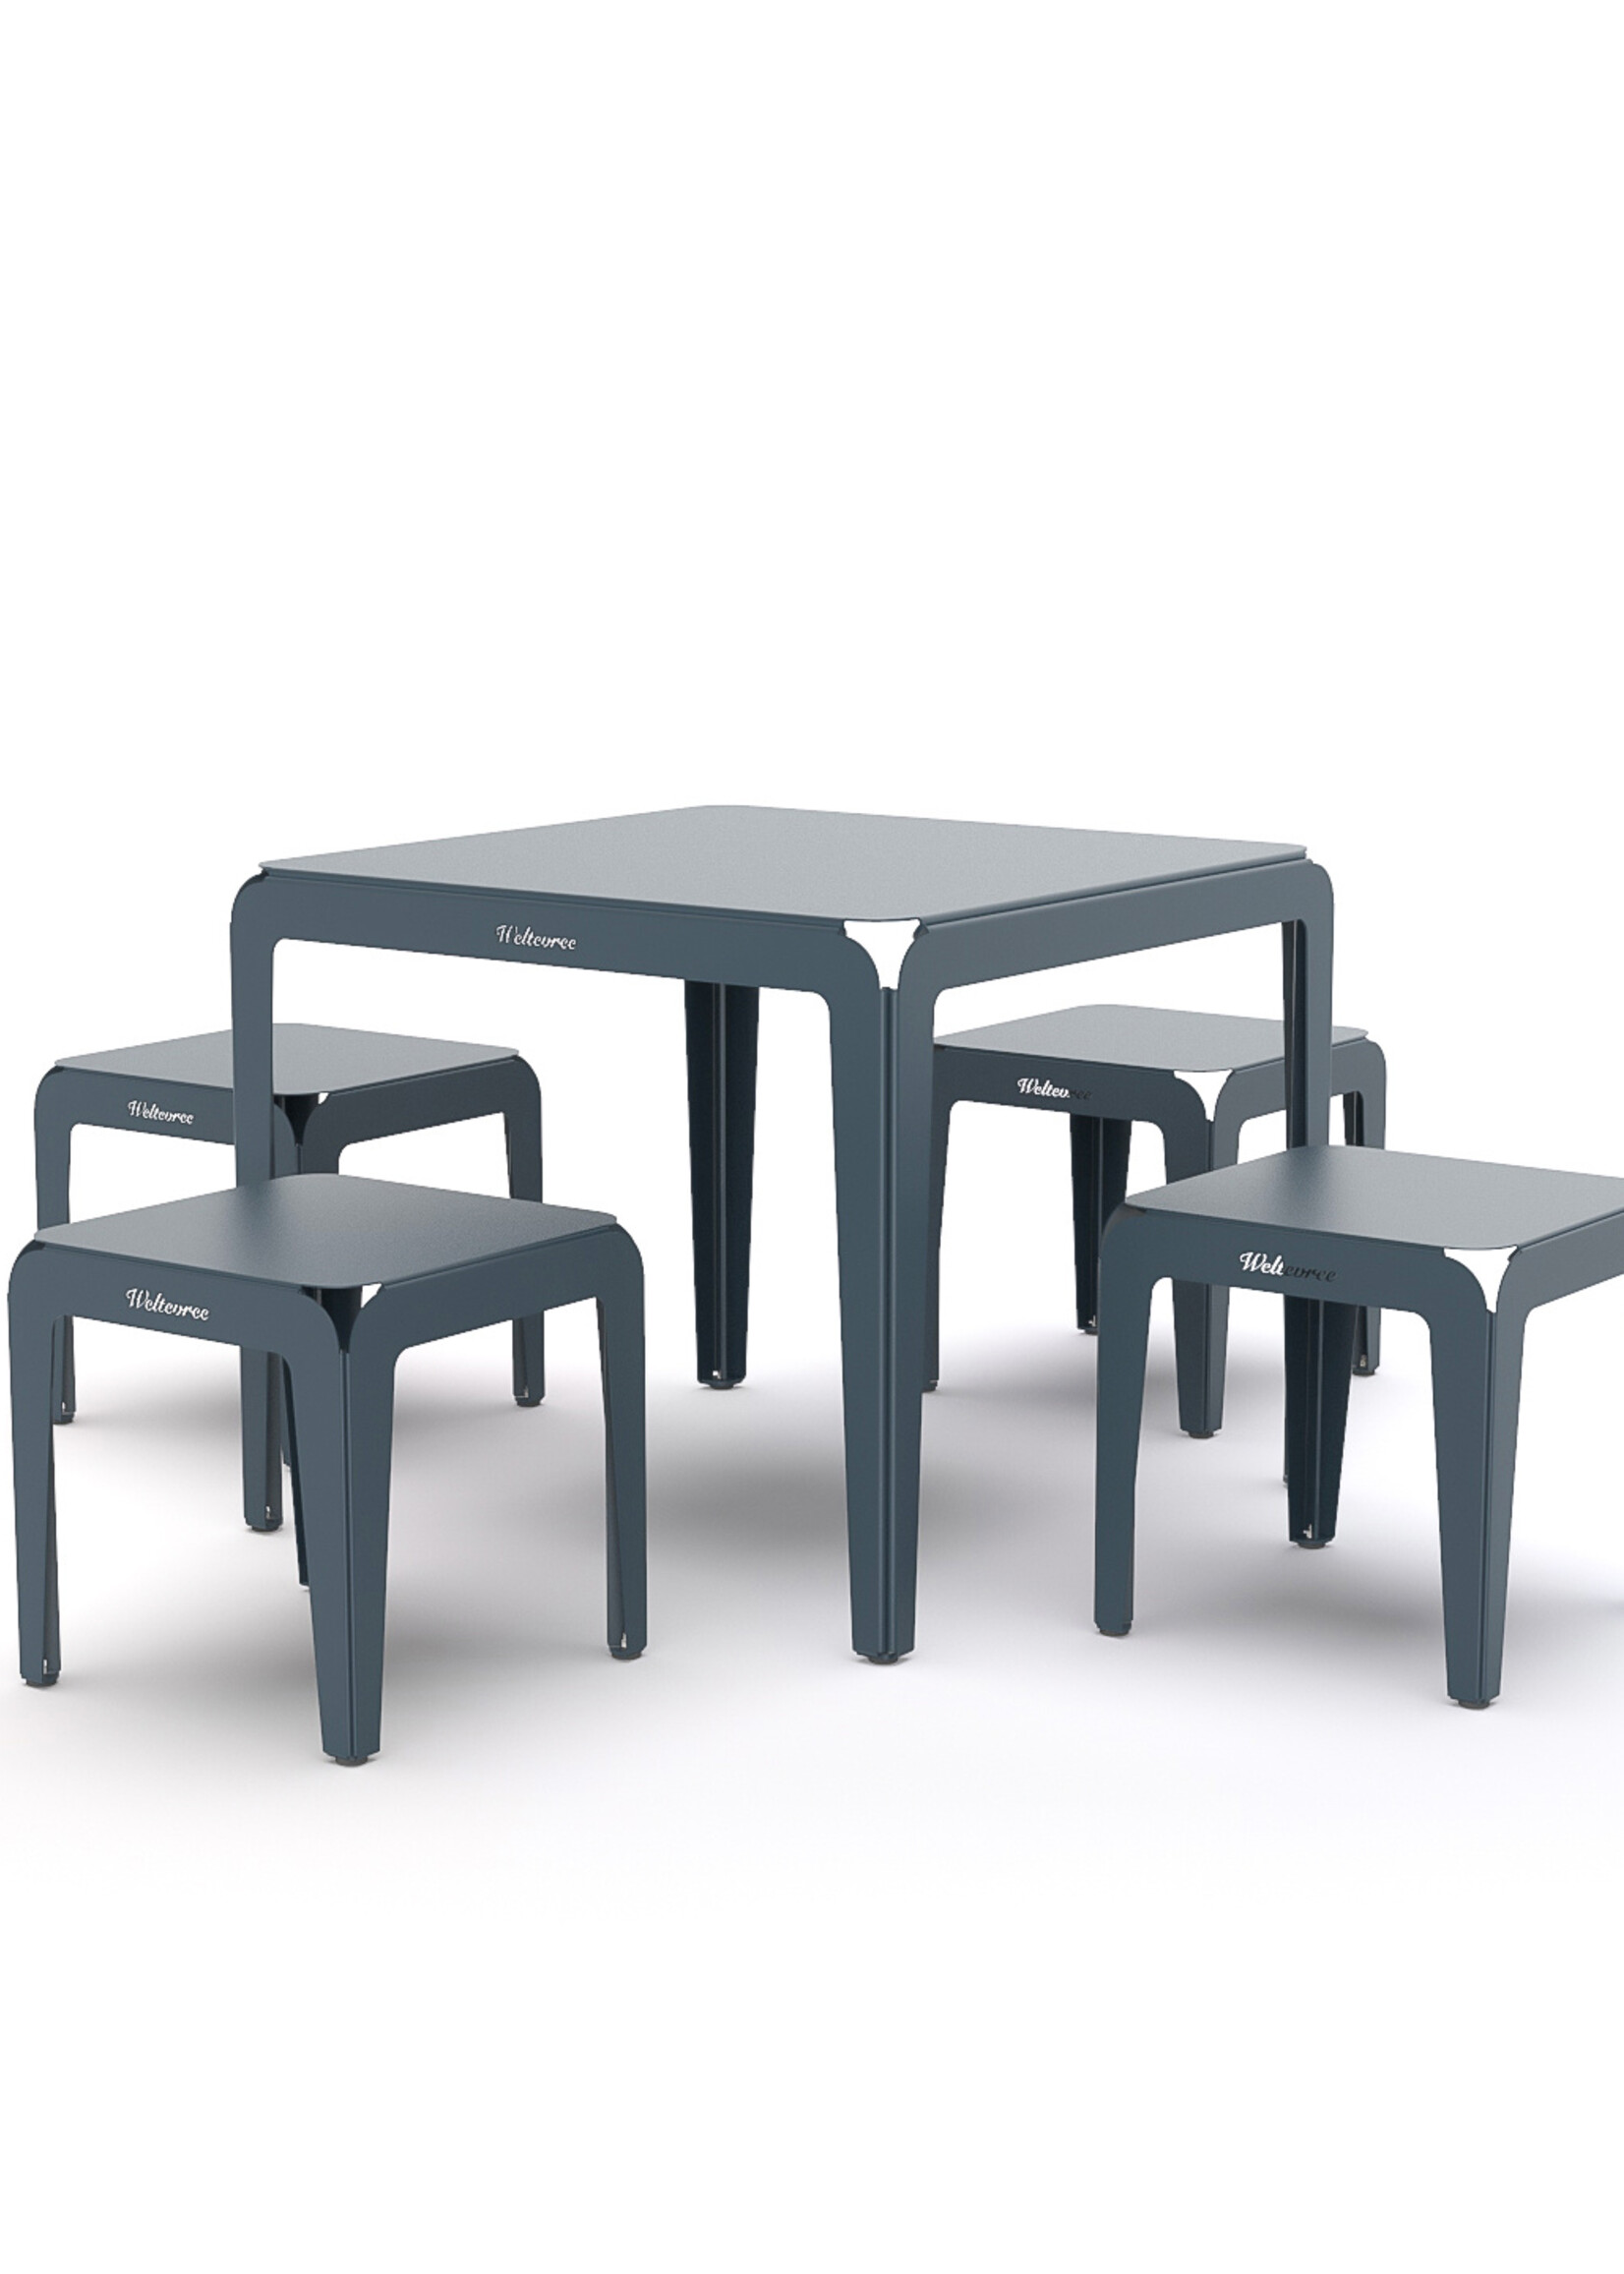 Weltevree Weltevree - Bended Table 90 - Grijs Blauw - Lichtgewicht aluminium tuintafel